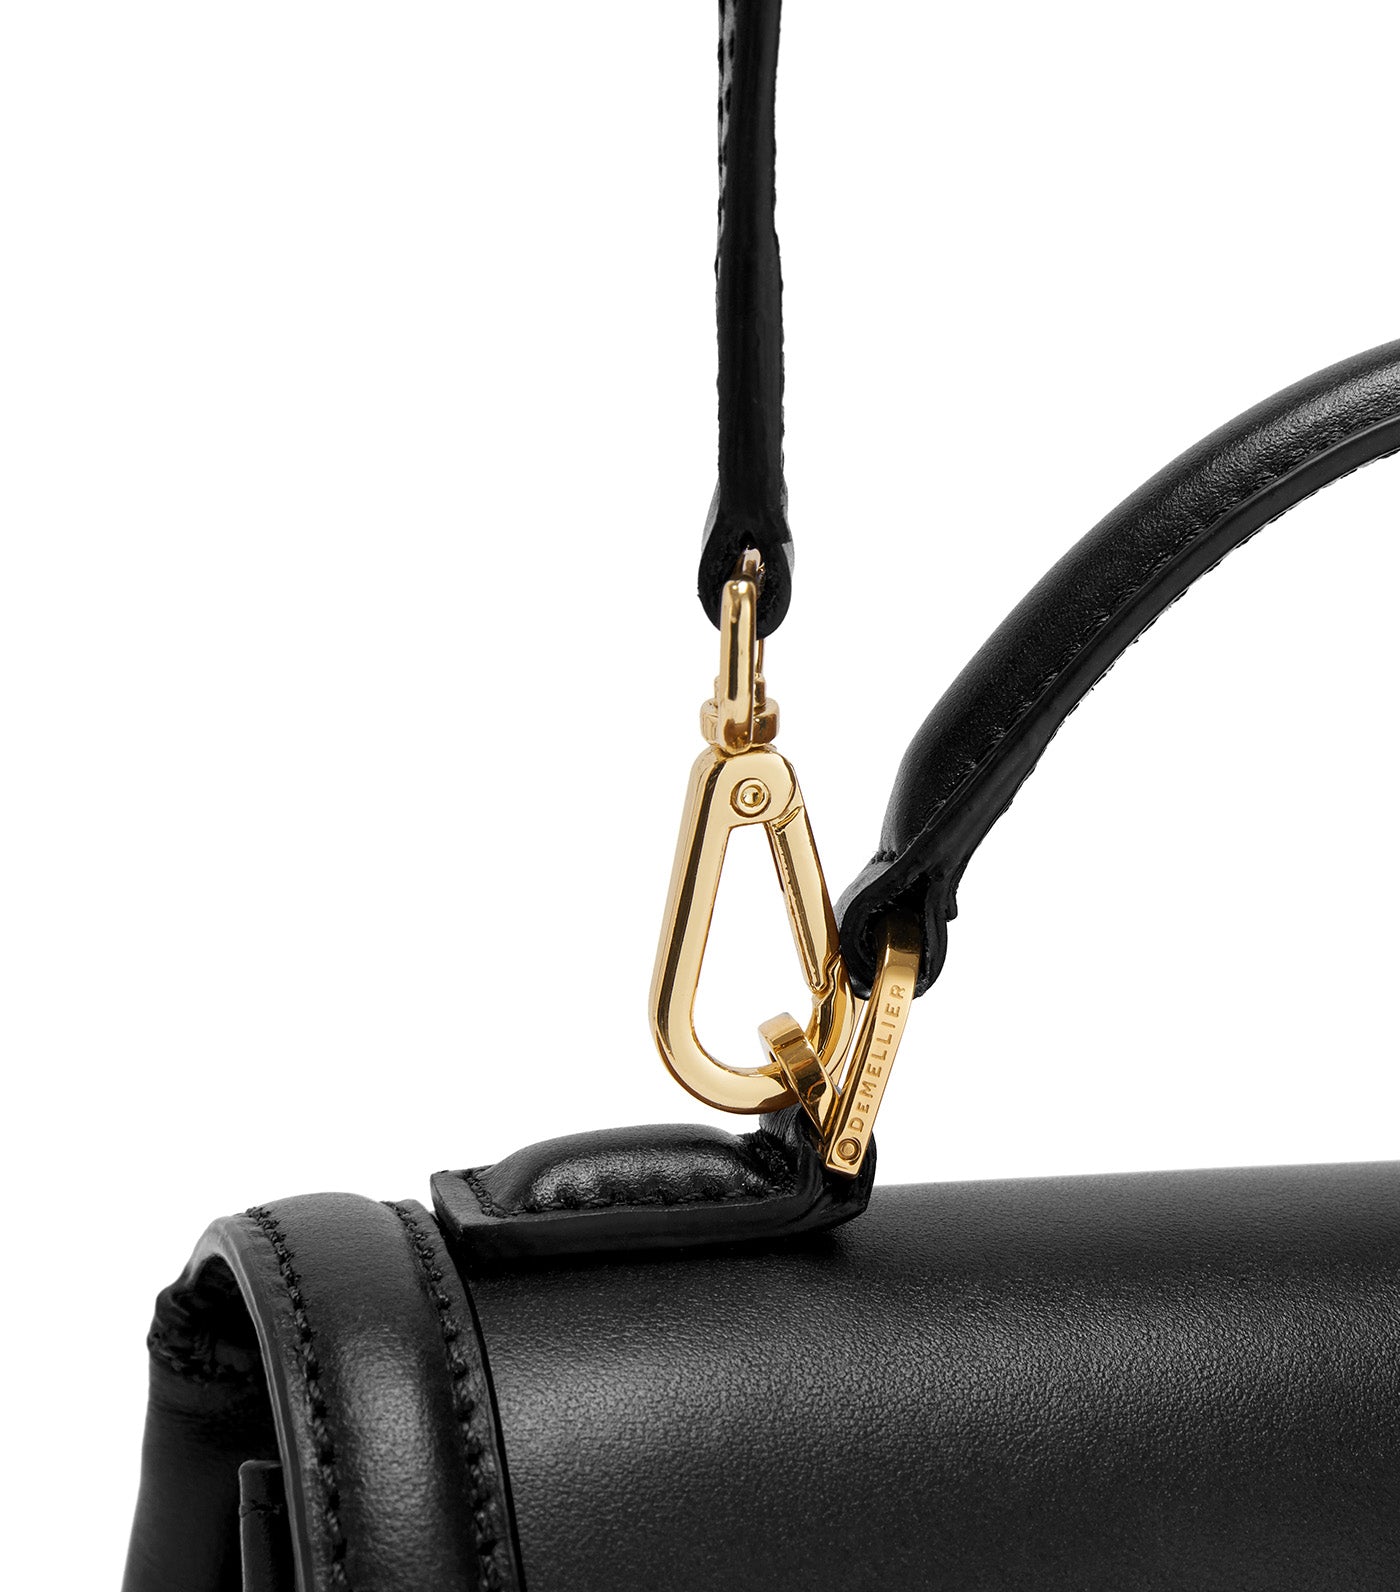 Paris Handbag Black Smooth